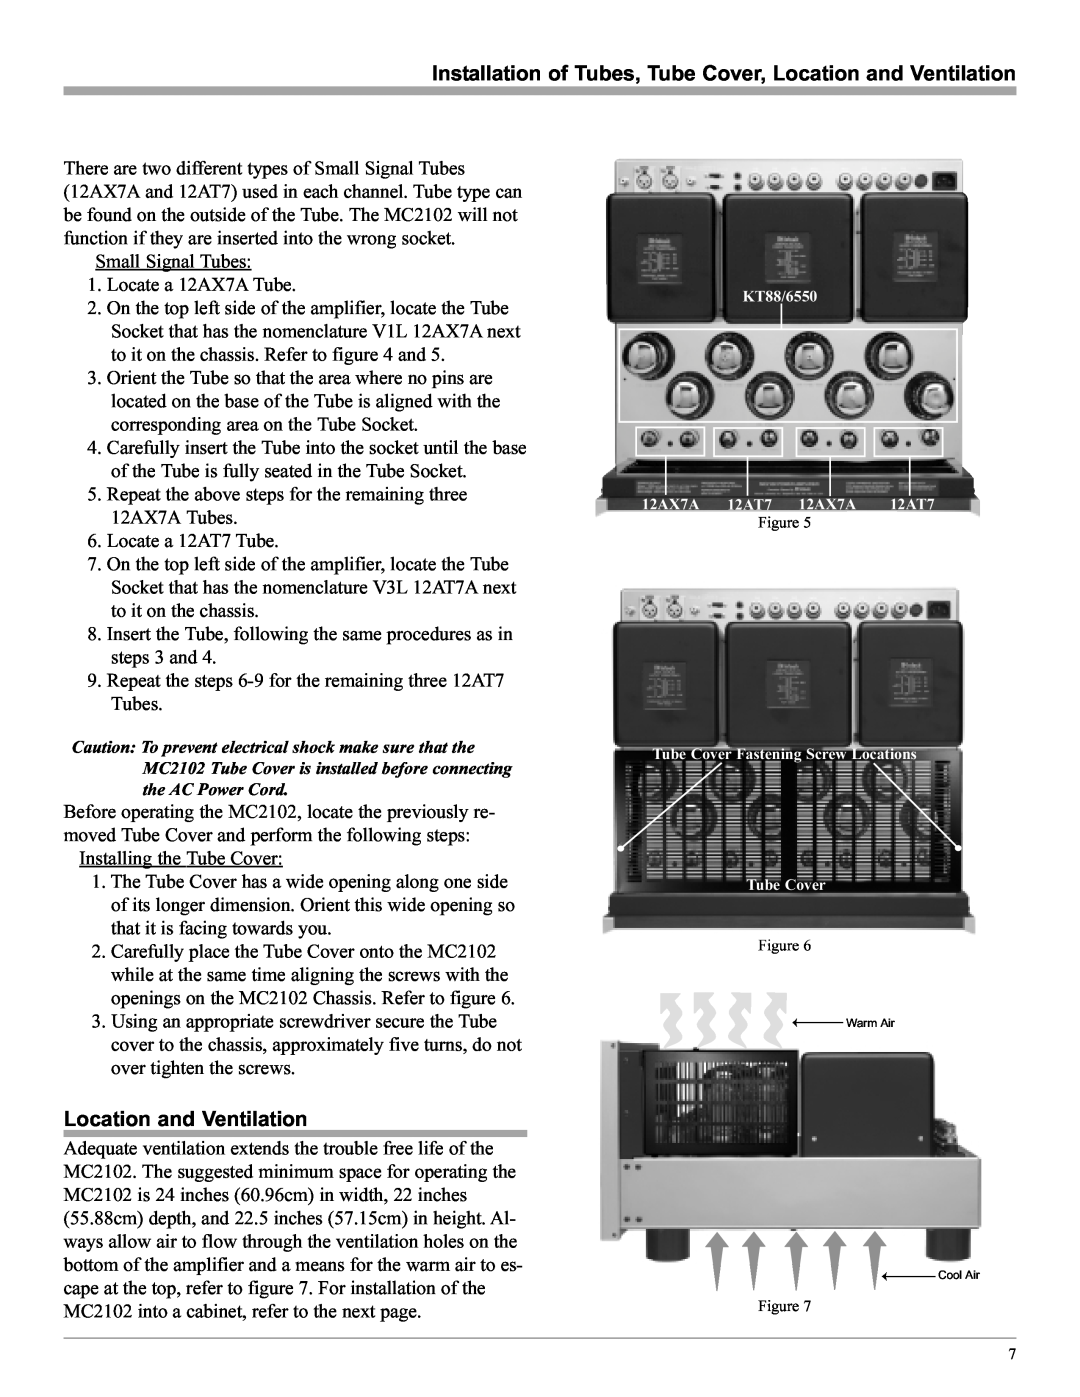 McIntosh MC2102 manual Location and Ventilation 